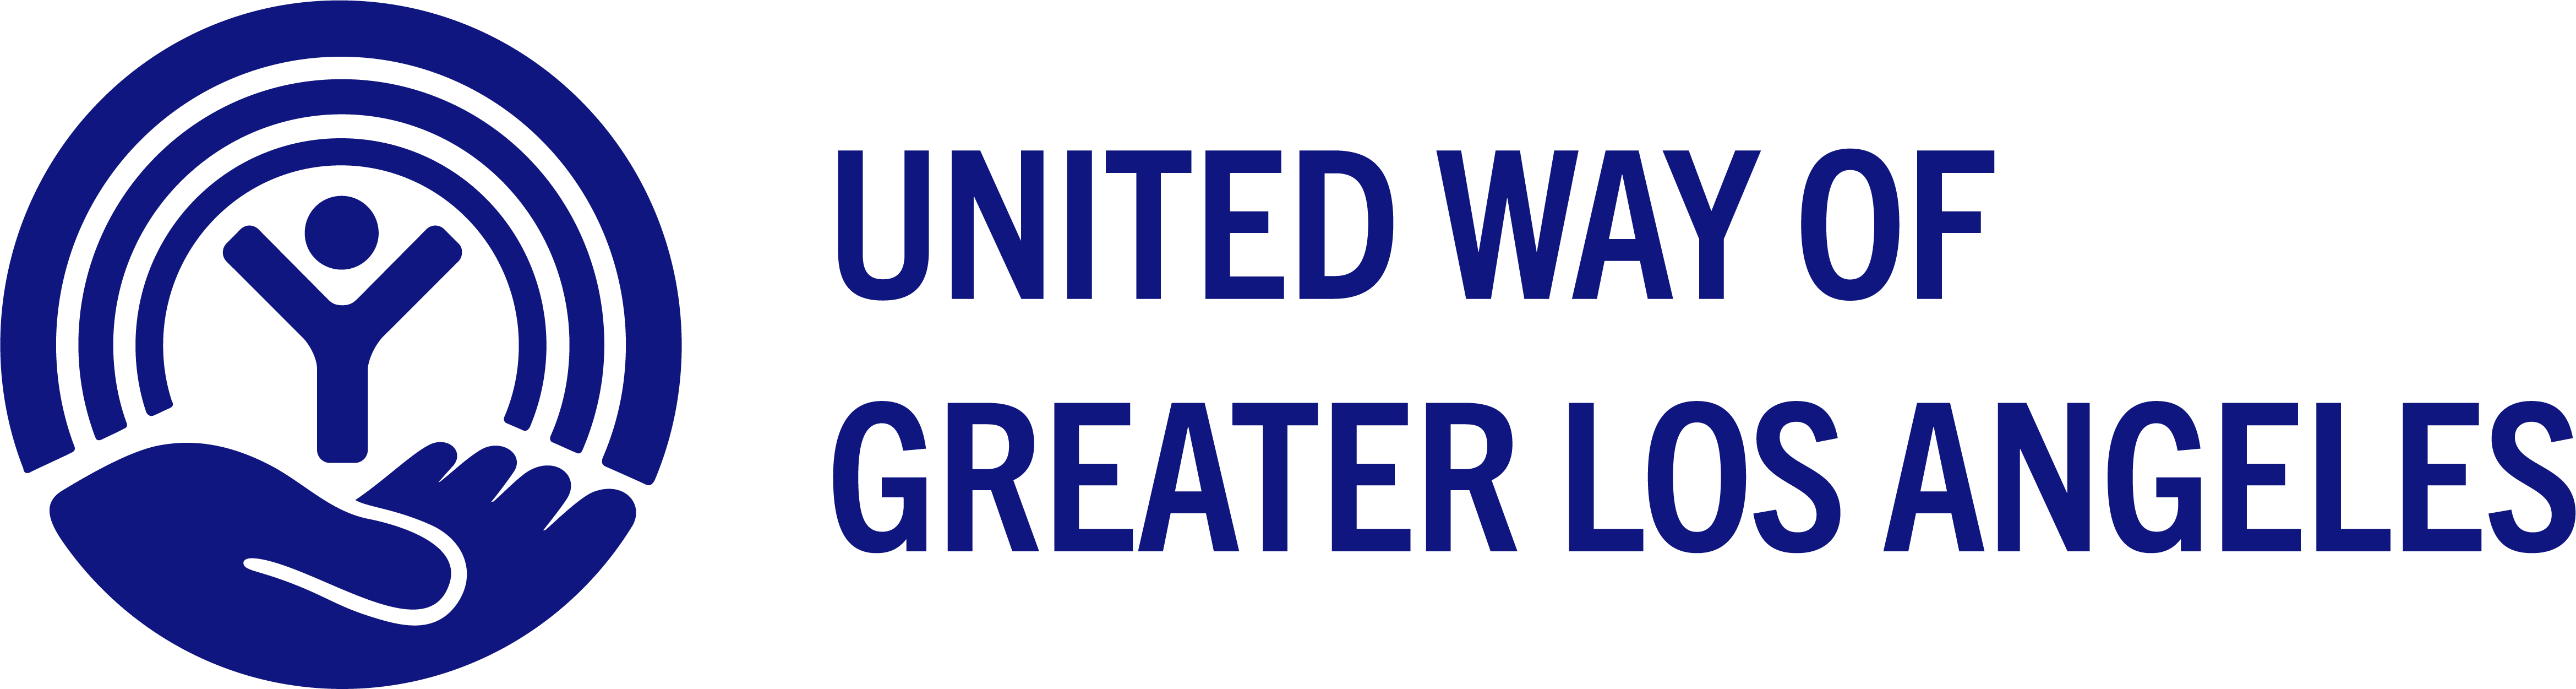 United Way LA logo